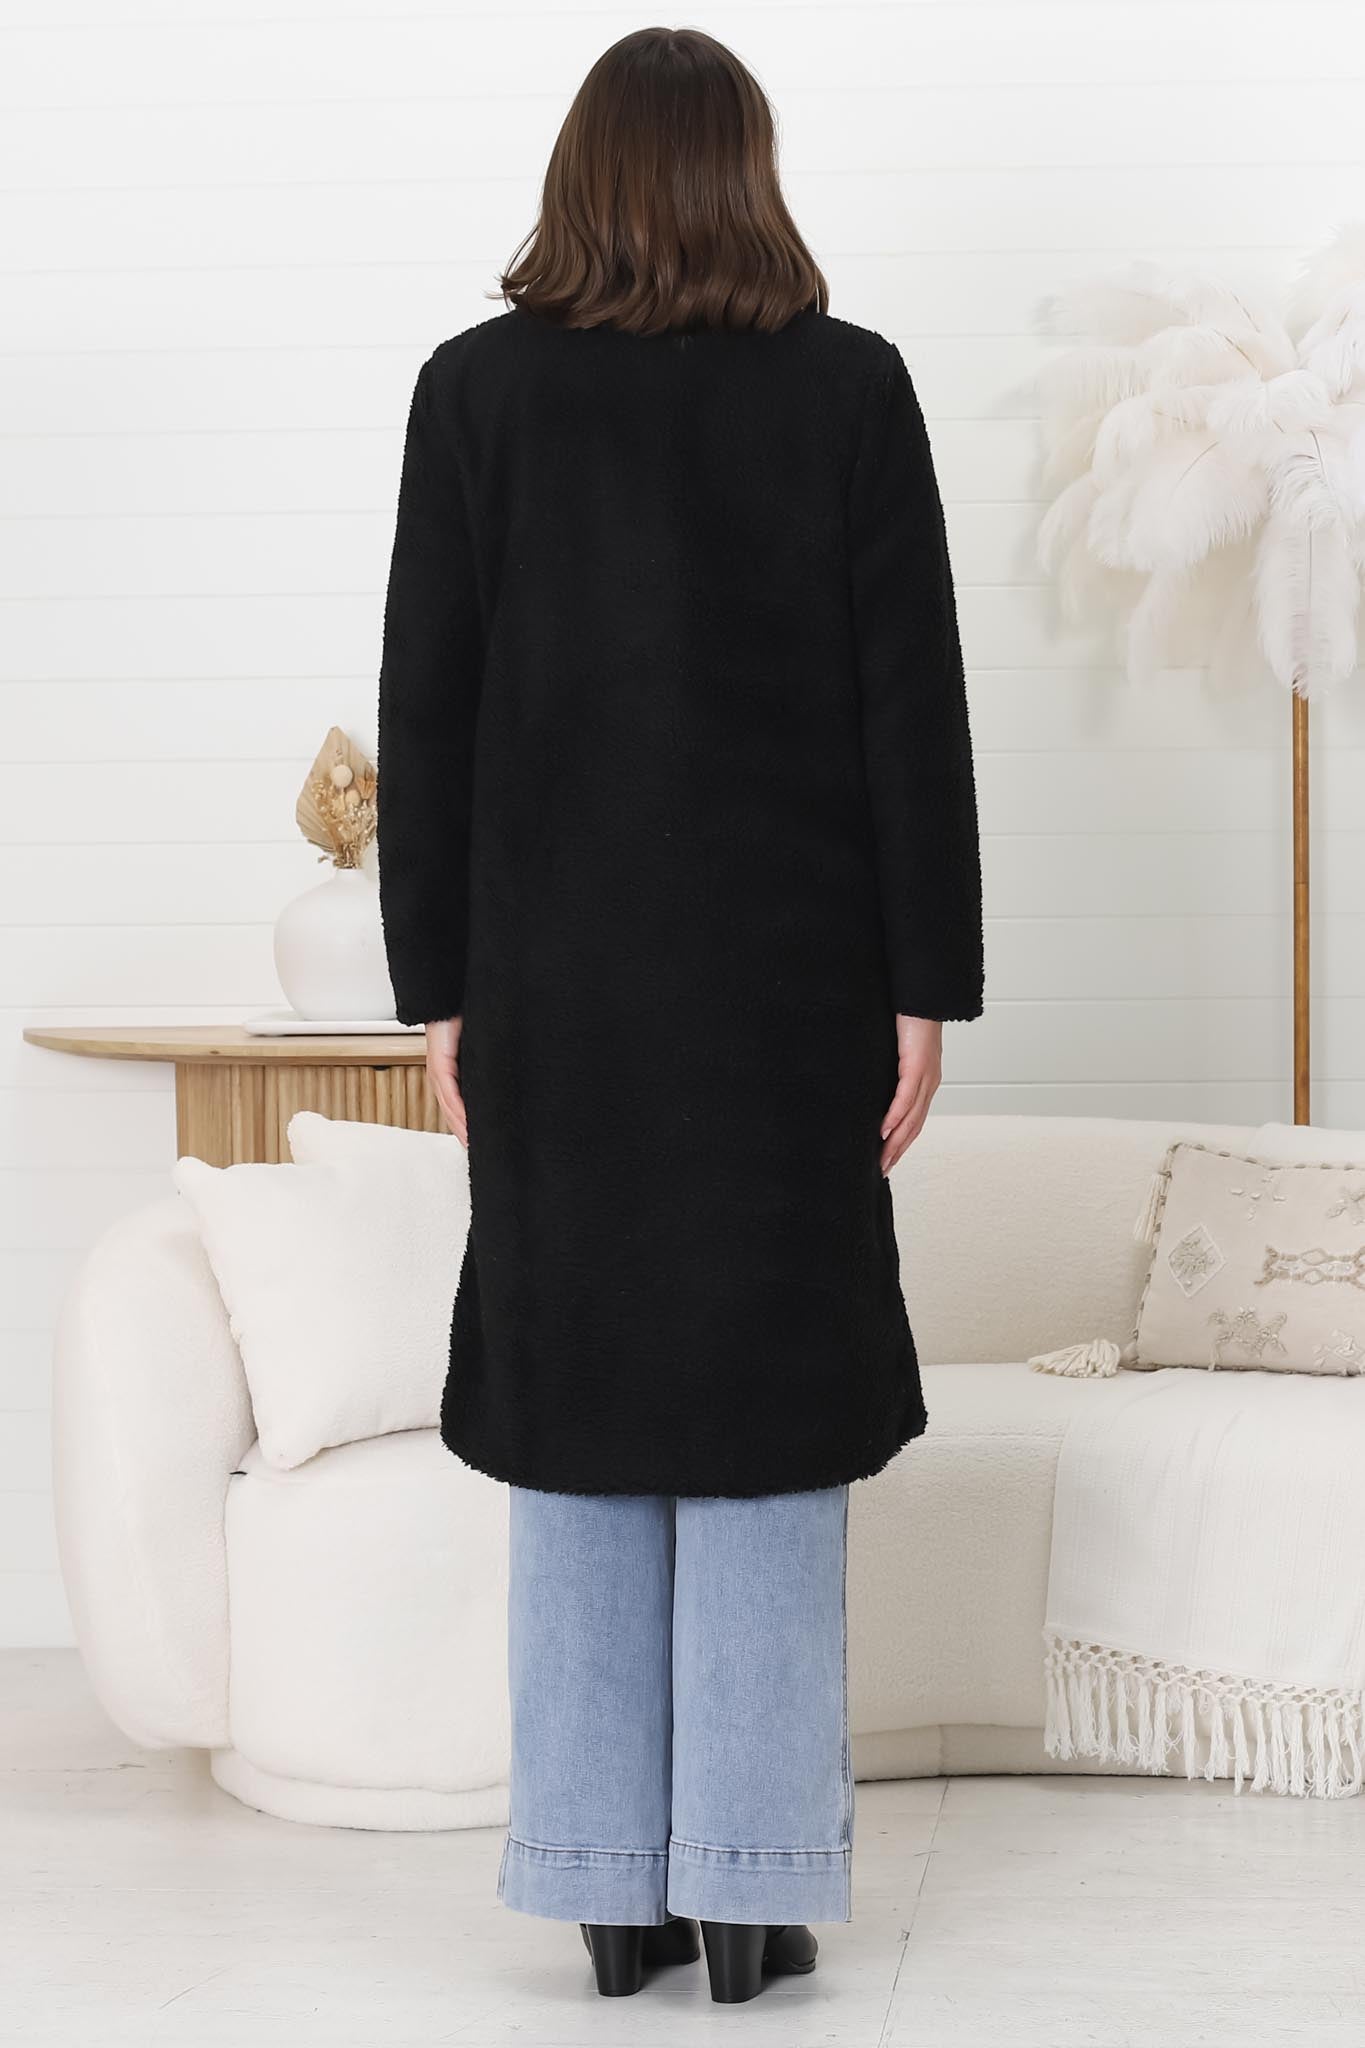 Rooney Coat - Lapel Collared Long Teddy Coat in Black